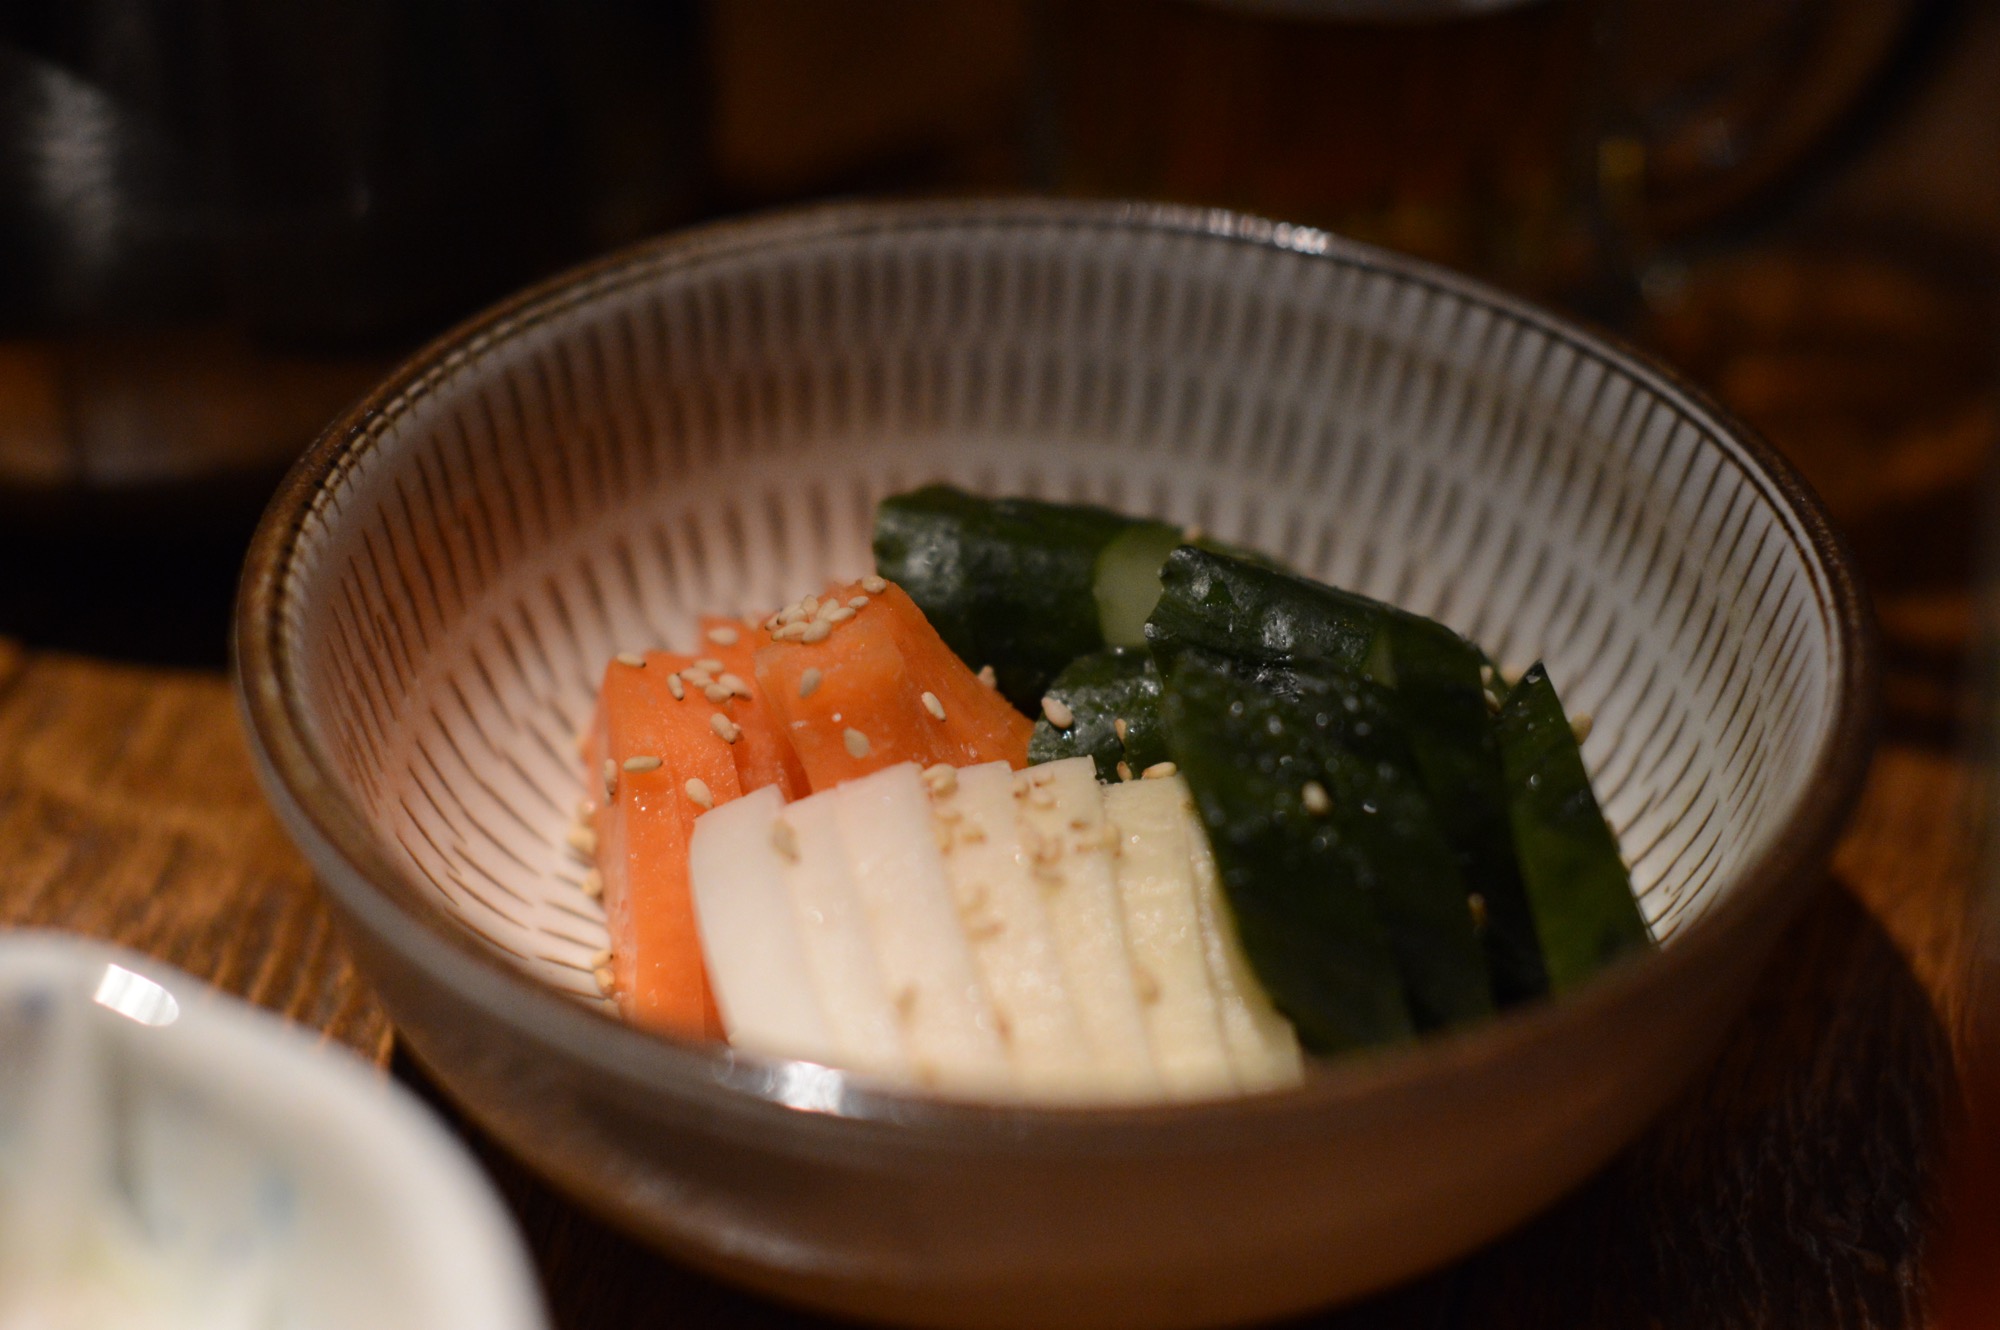 Jikasei Nukazuke, Homemade Japanese pickles fermented with rice bran